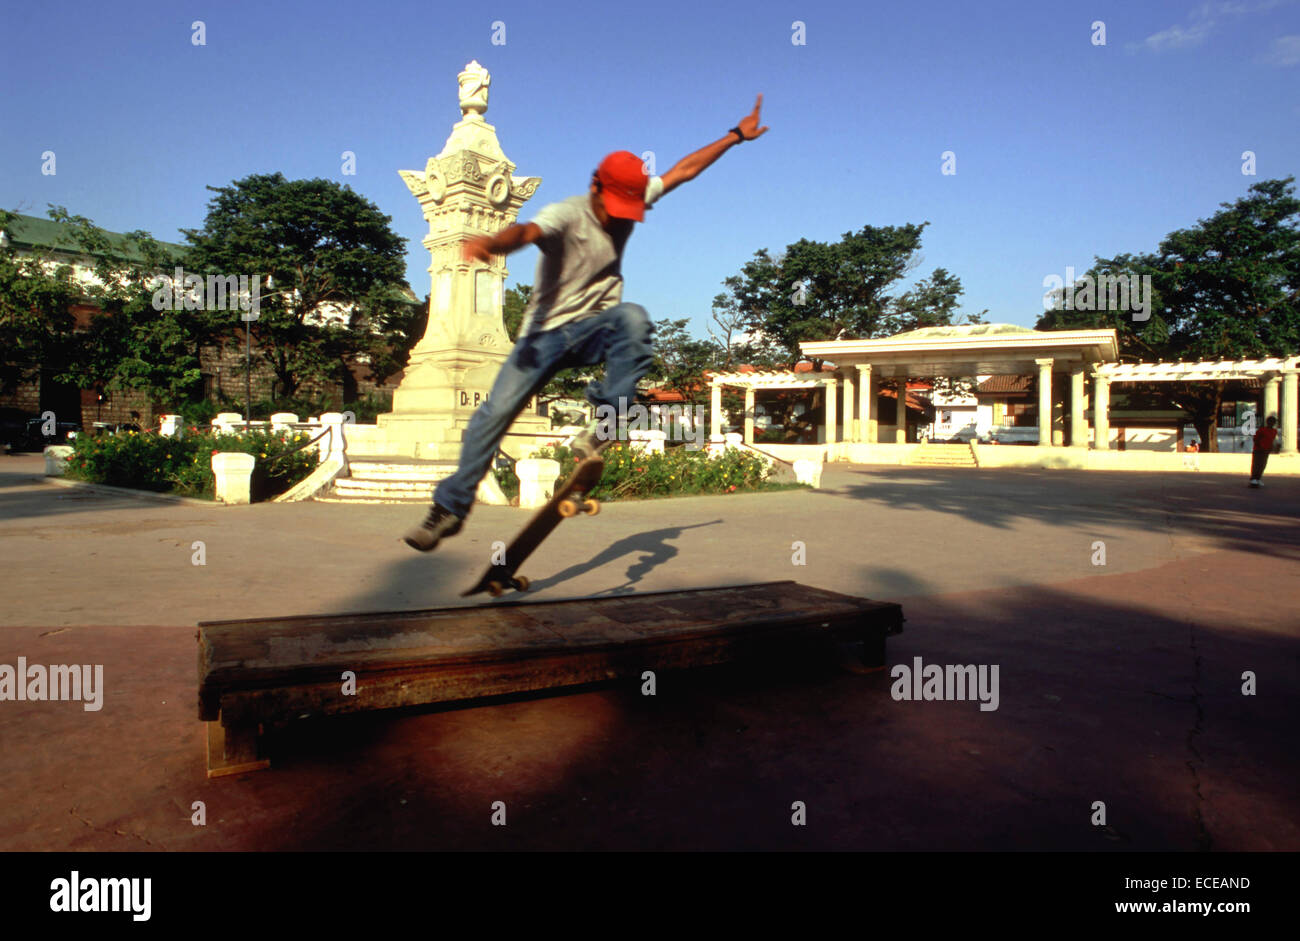 Boy playing skateboard at Plaza Burgos. Ilocos. Vigan. Philippines. Plaza Burgos. Plaza Burgos is the smaller of the two major p Stock Photo